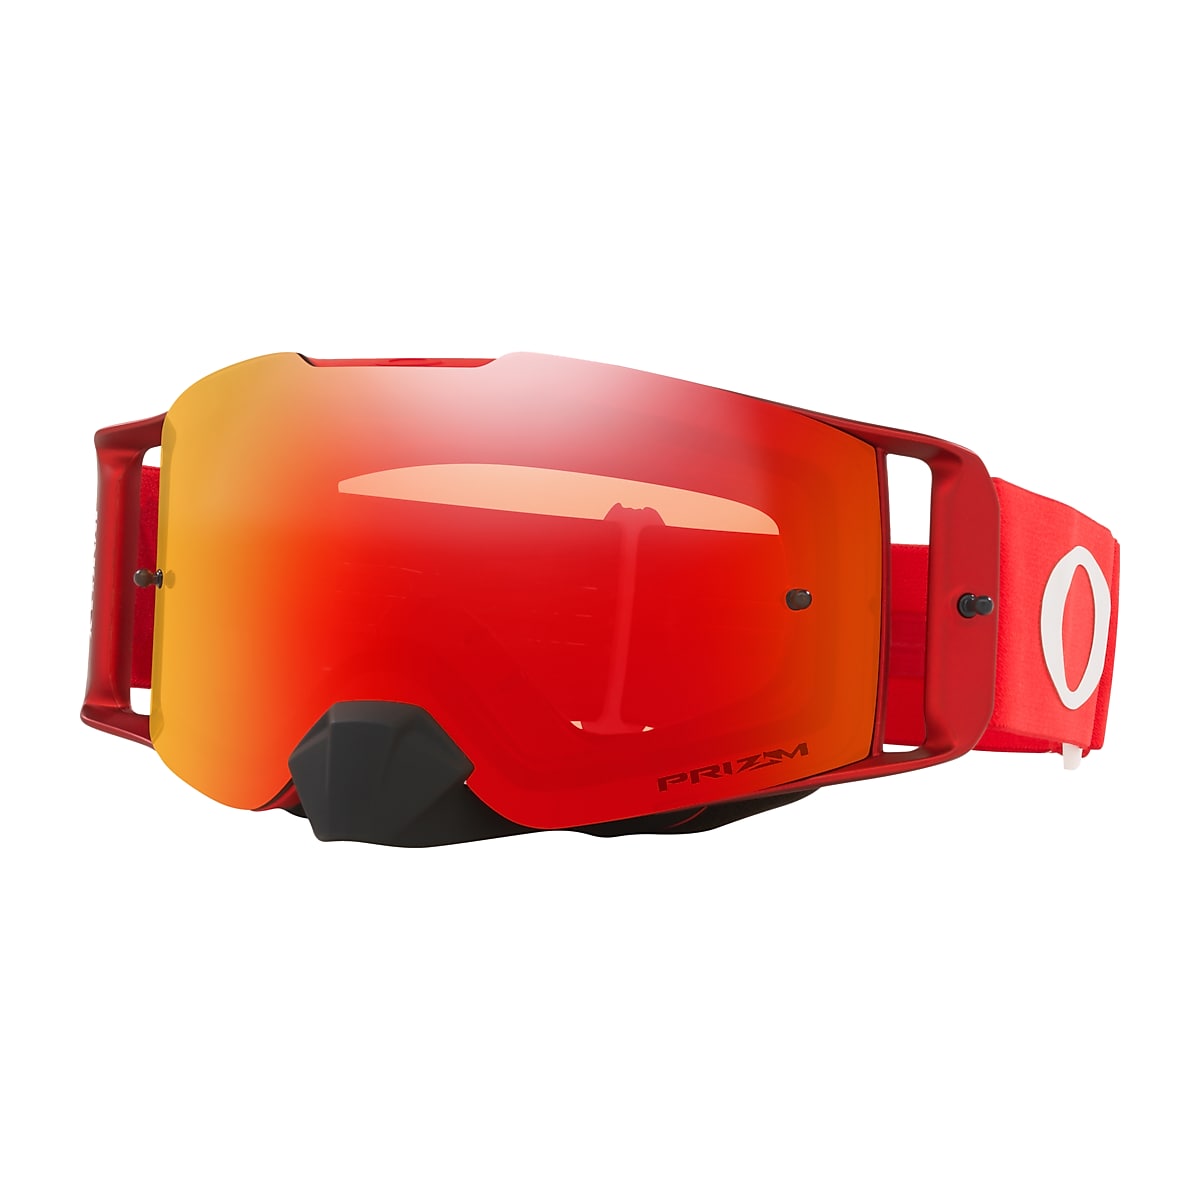 Oakley Front Line™ MX Goggles - Moto Red - Prizm MX Torch Iridium -  OO7087-56 | Oakley US Store